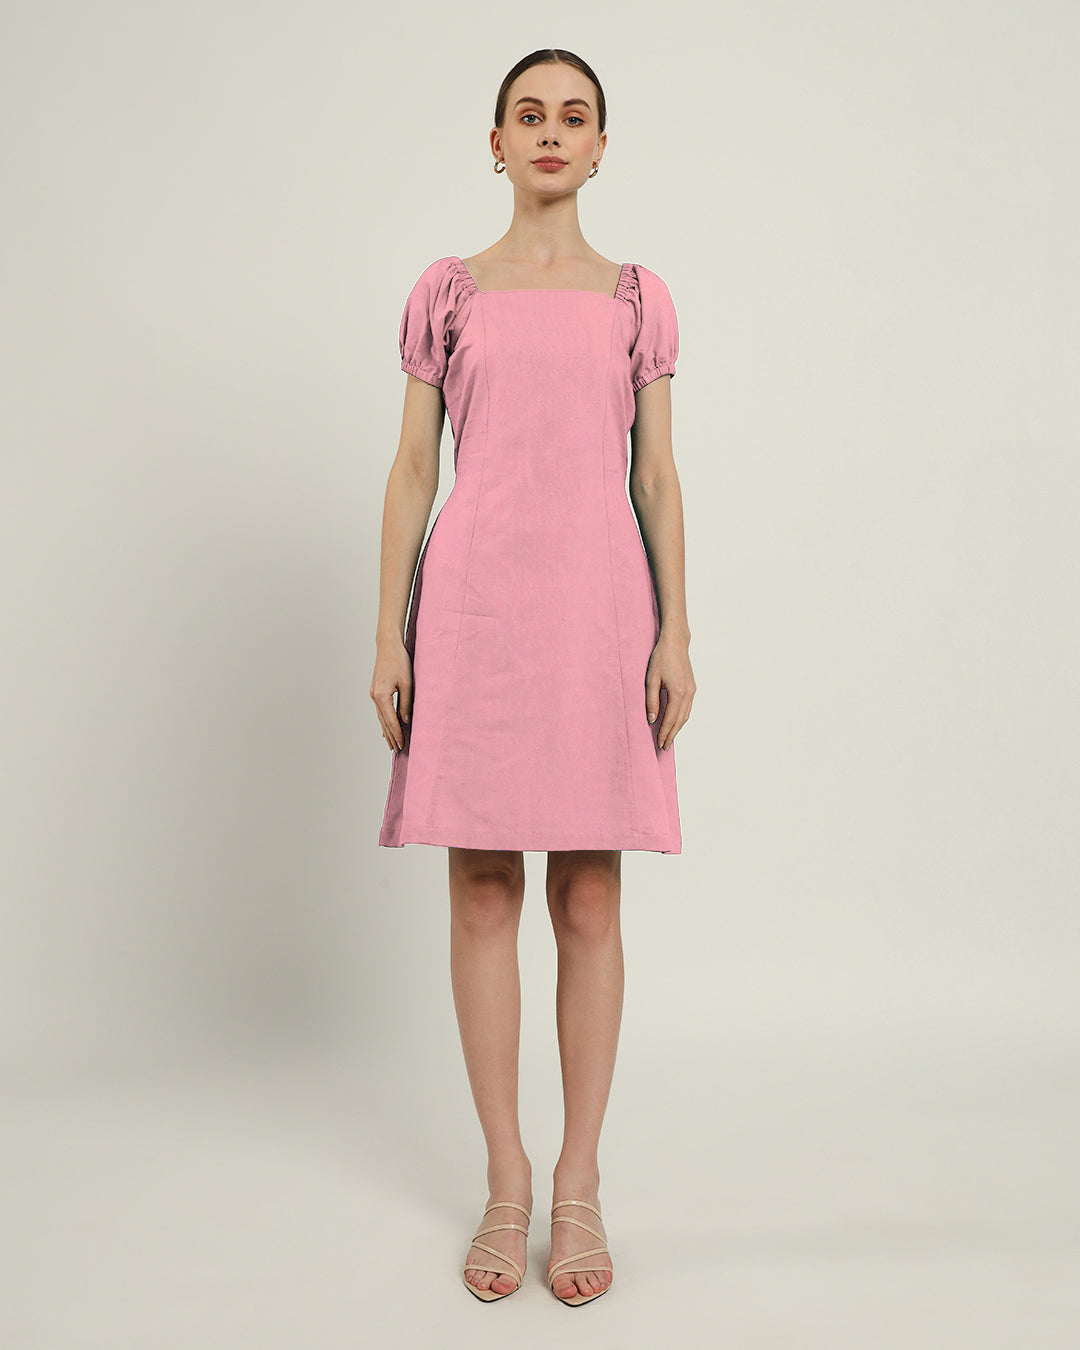 The Arar Fondant Pink Cotton Dress